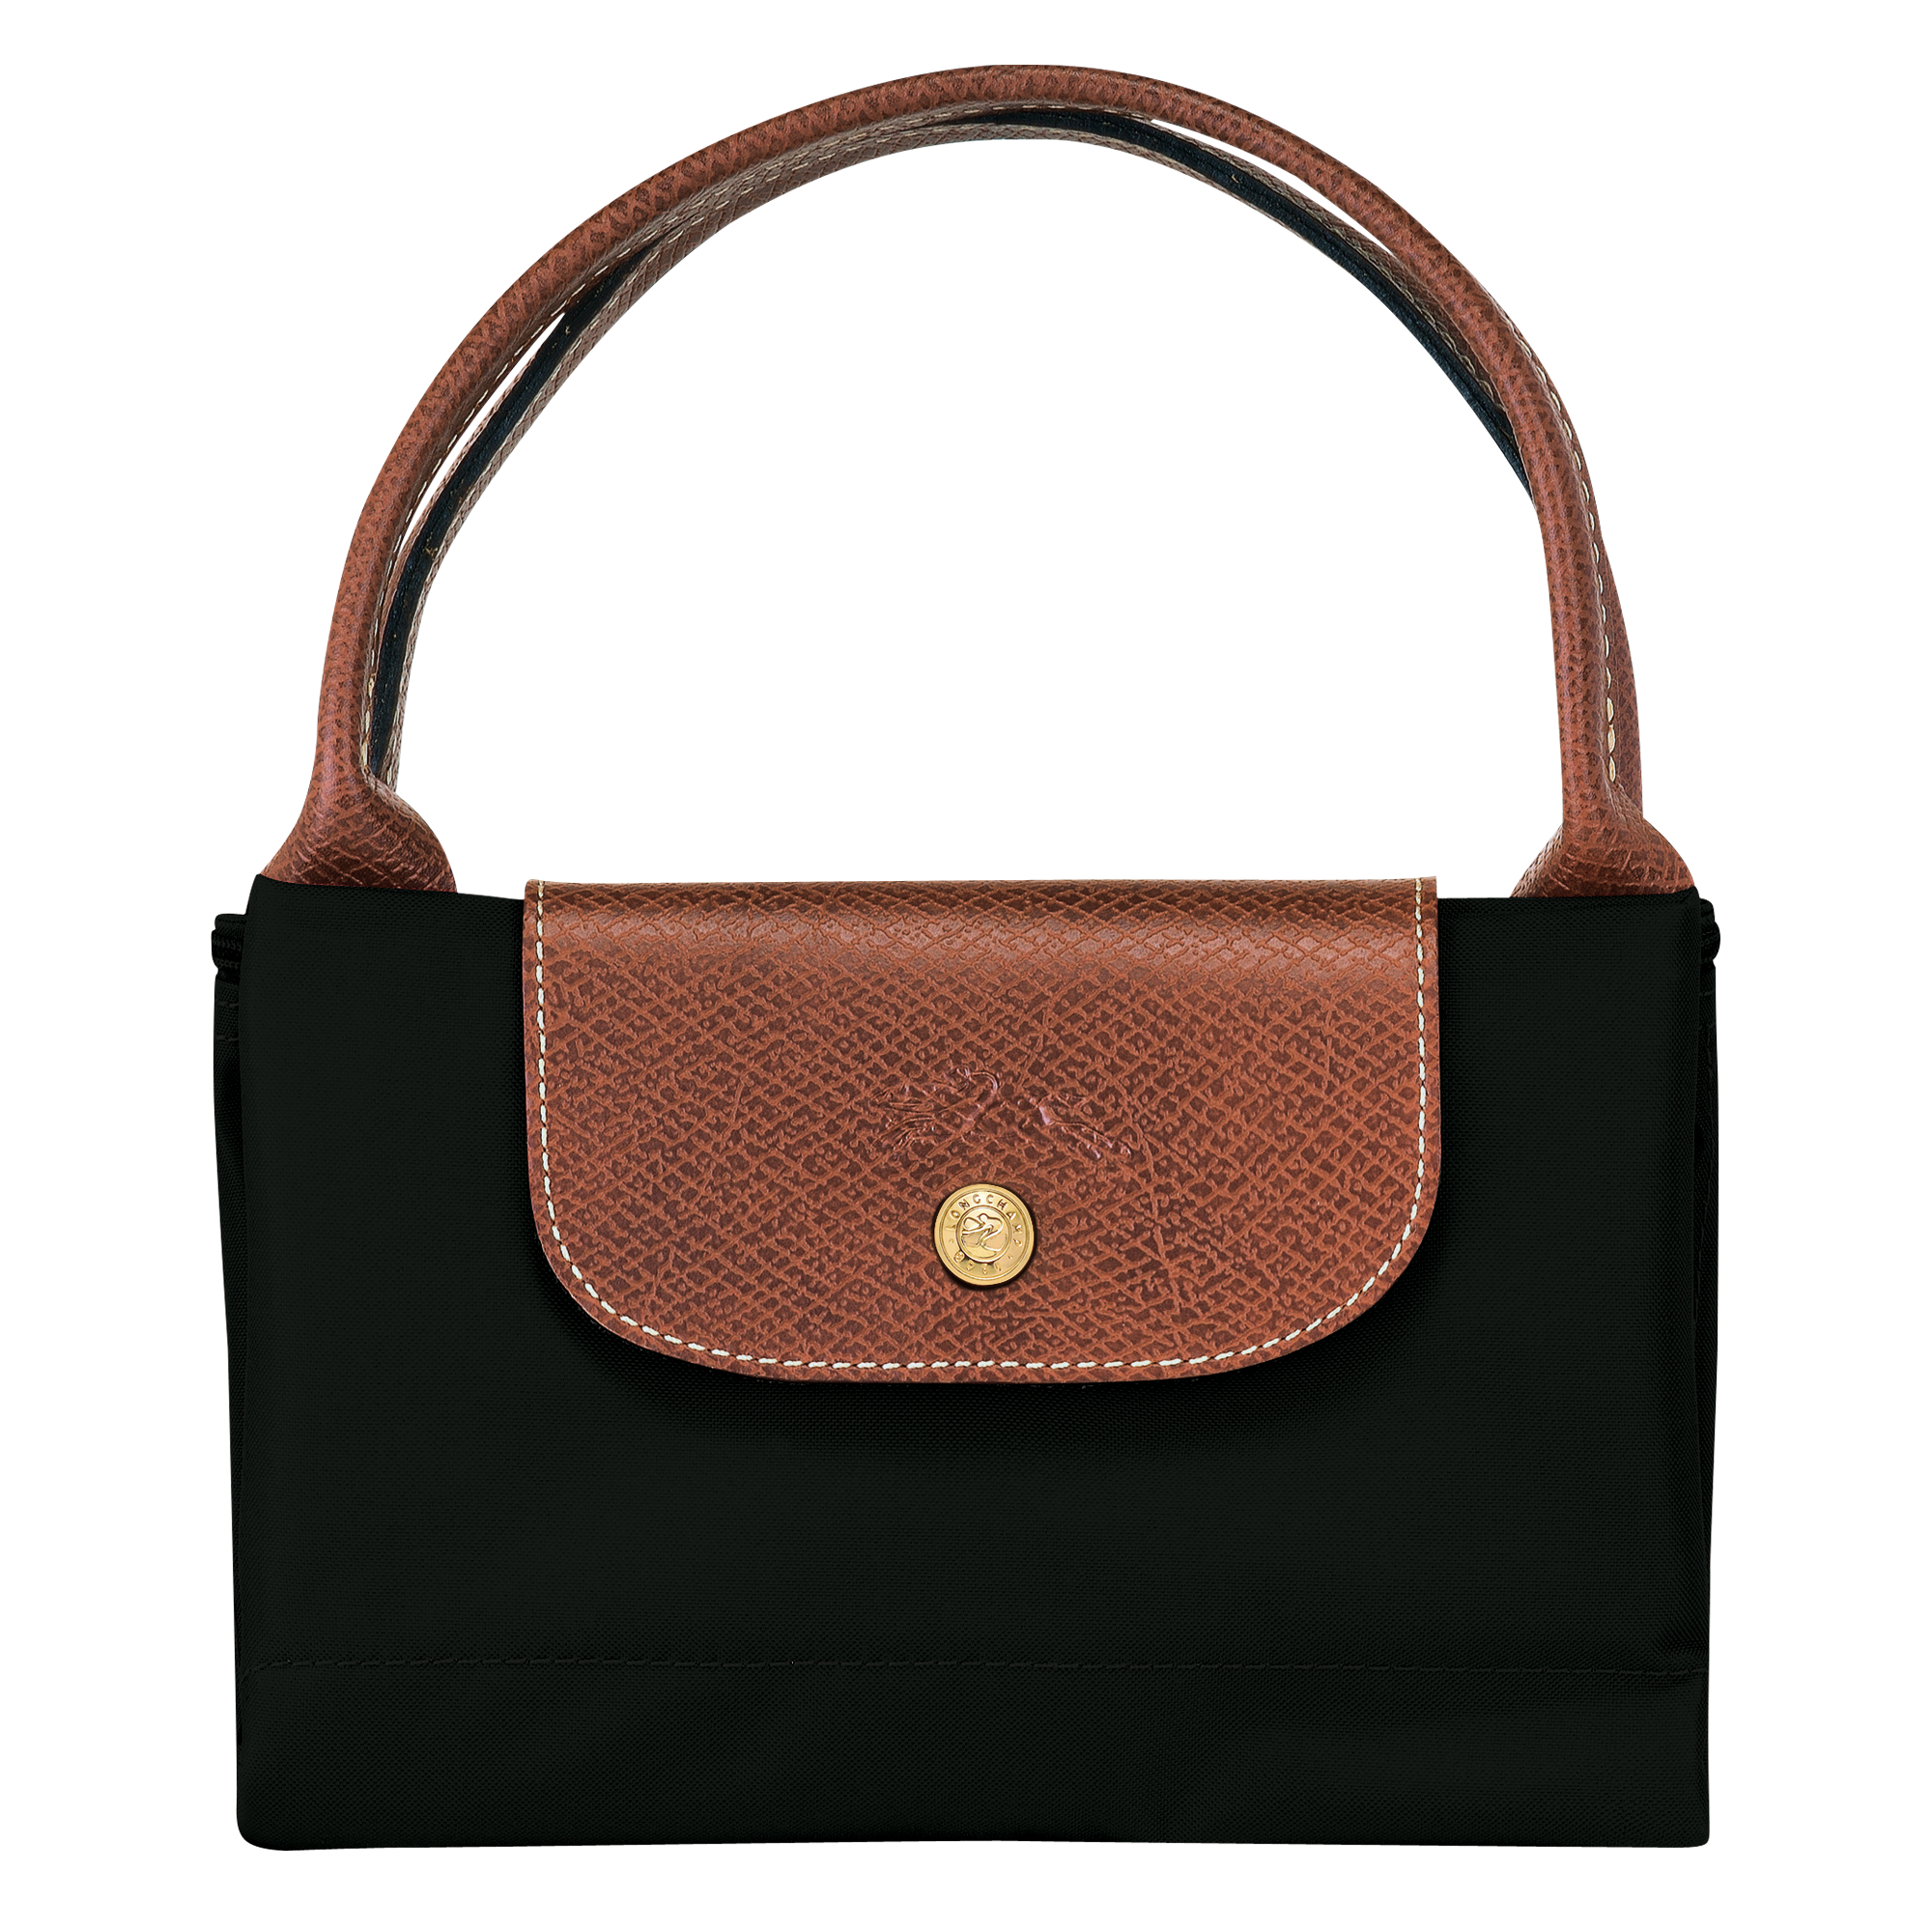 Le Pliage Original Top Handle Bag M in Black - Folded - L1623089001